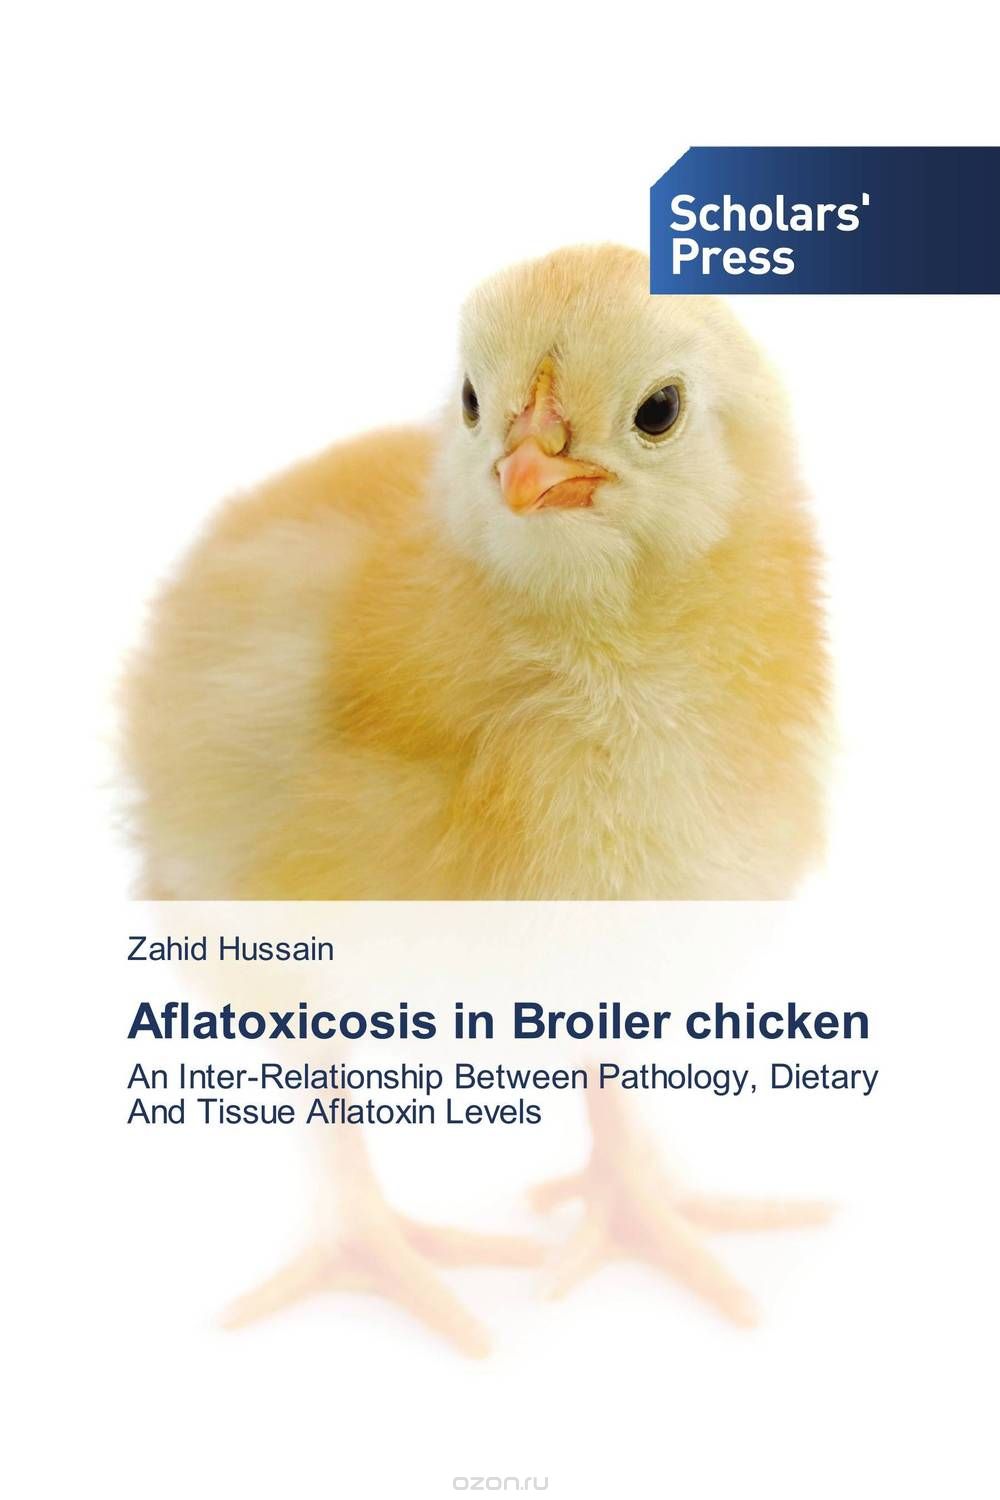 Скачать книгу "Aflatoxicosis in Broiler chicken"